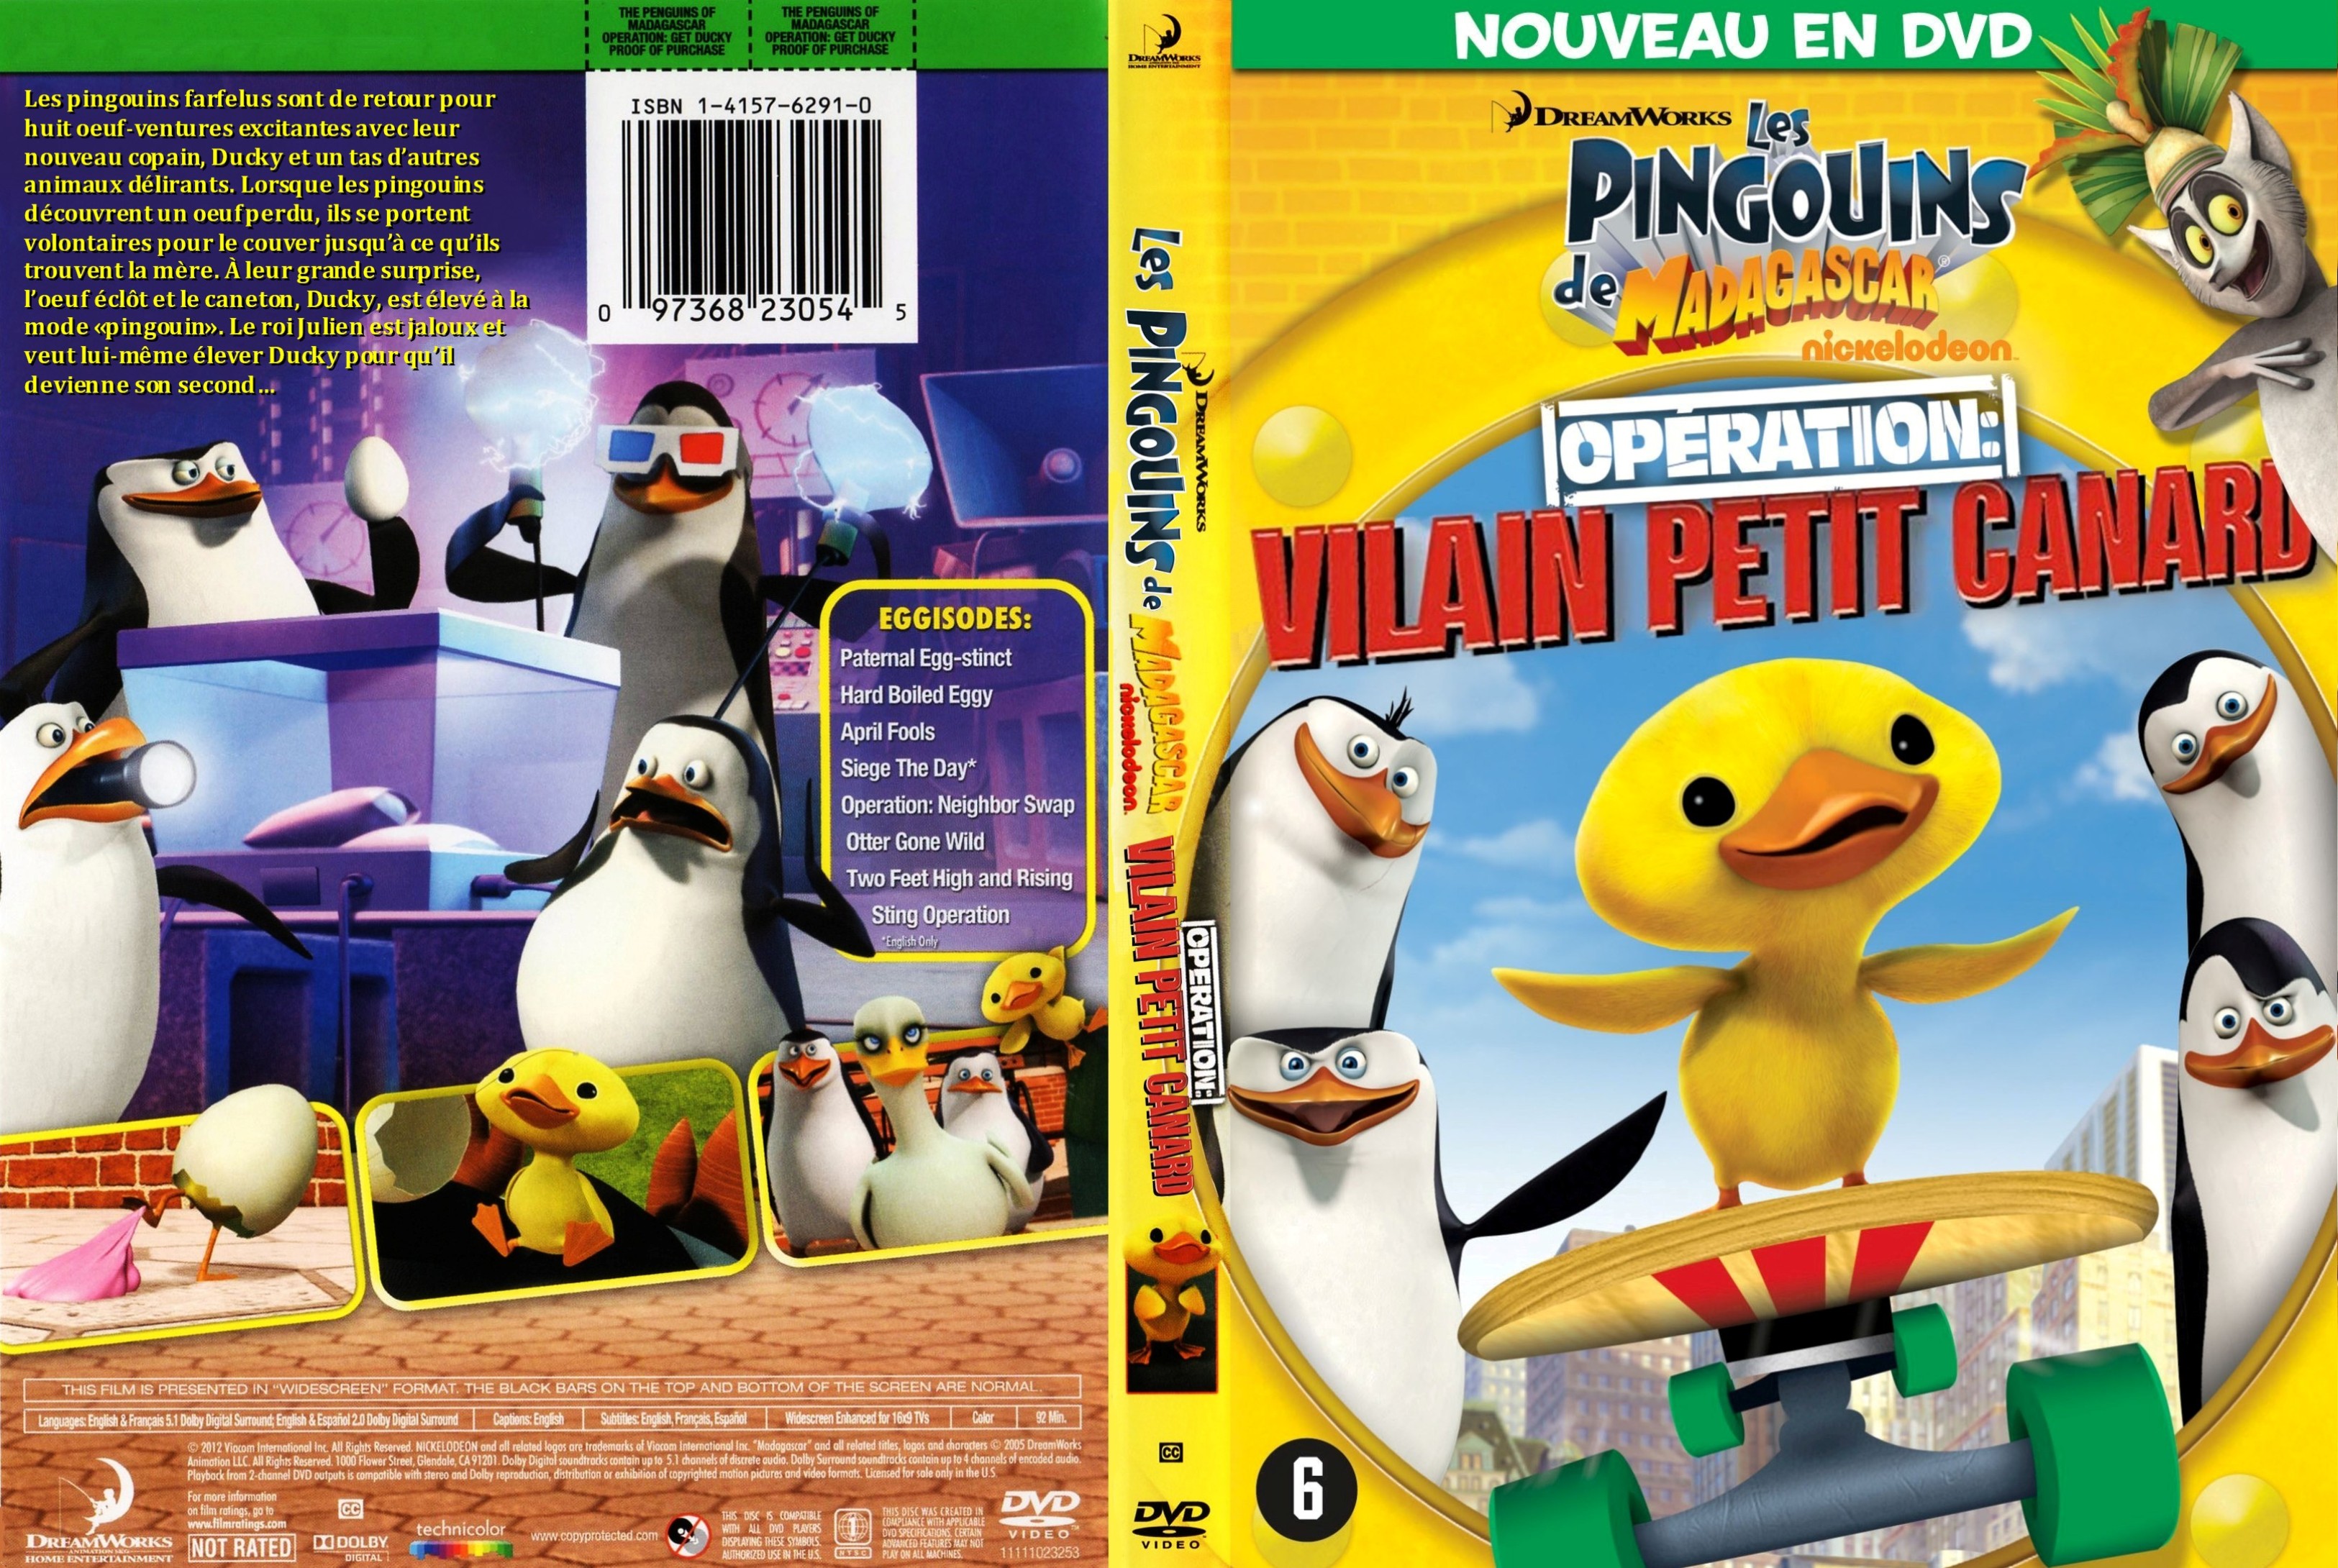 Jaquette DVD Les Pingouins de Madagascar - Vol 6 custom